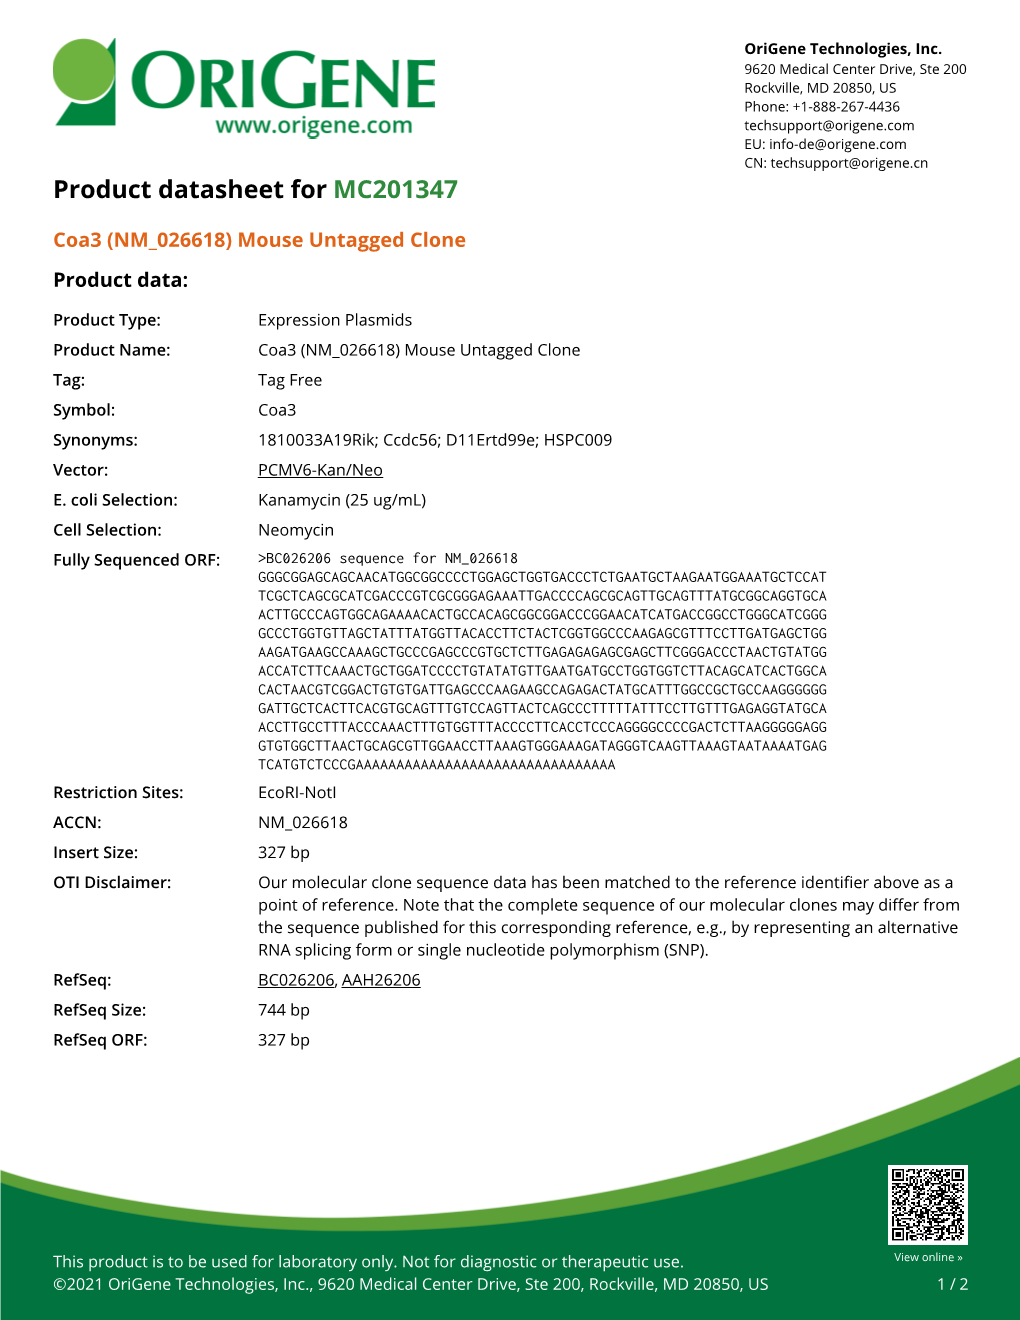 Coa3 (NM 026618) Mouse Untagged Clone – MC201347 | Origene